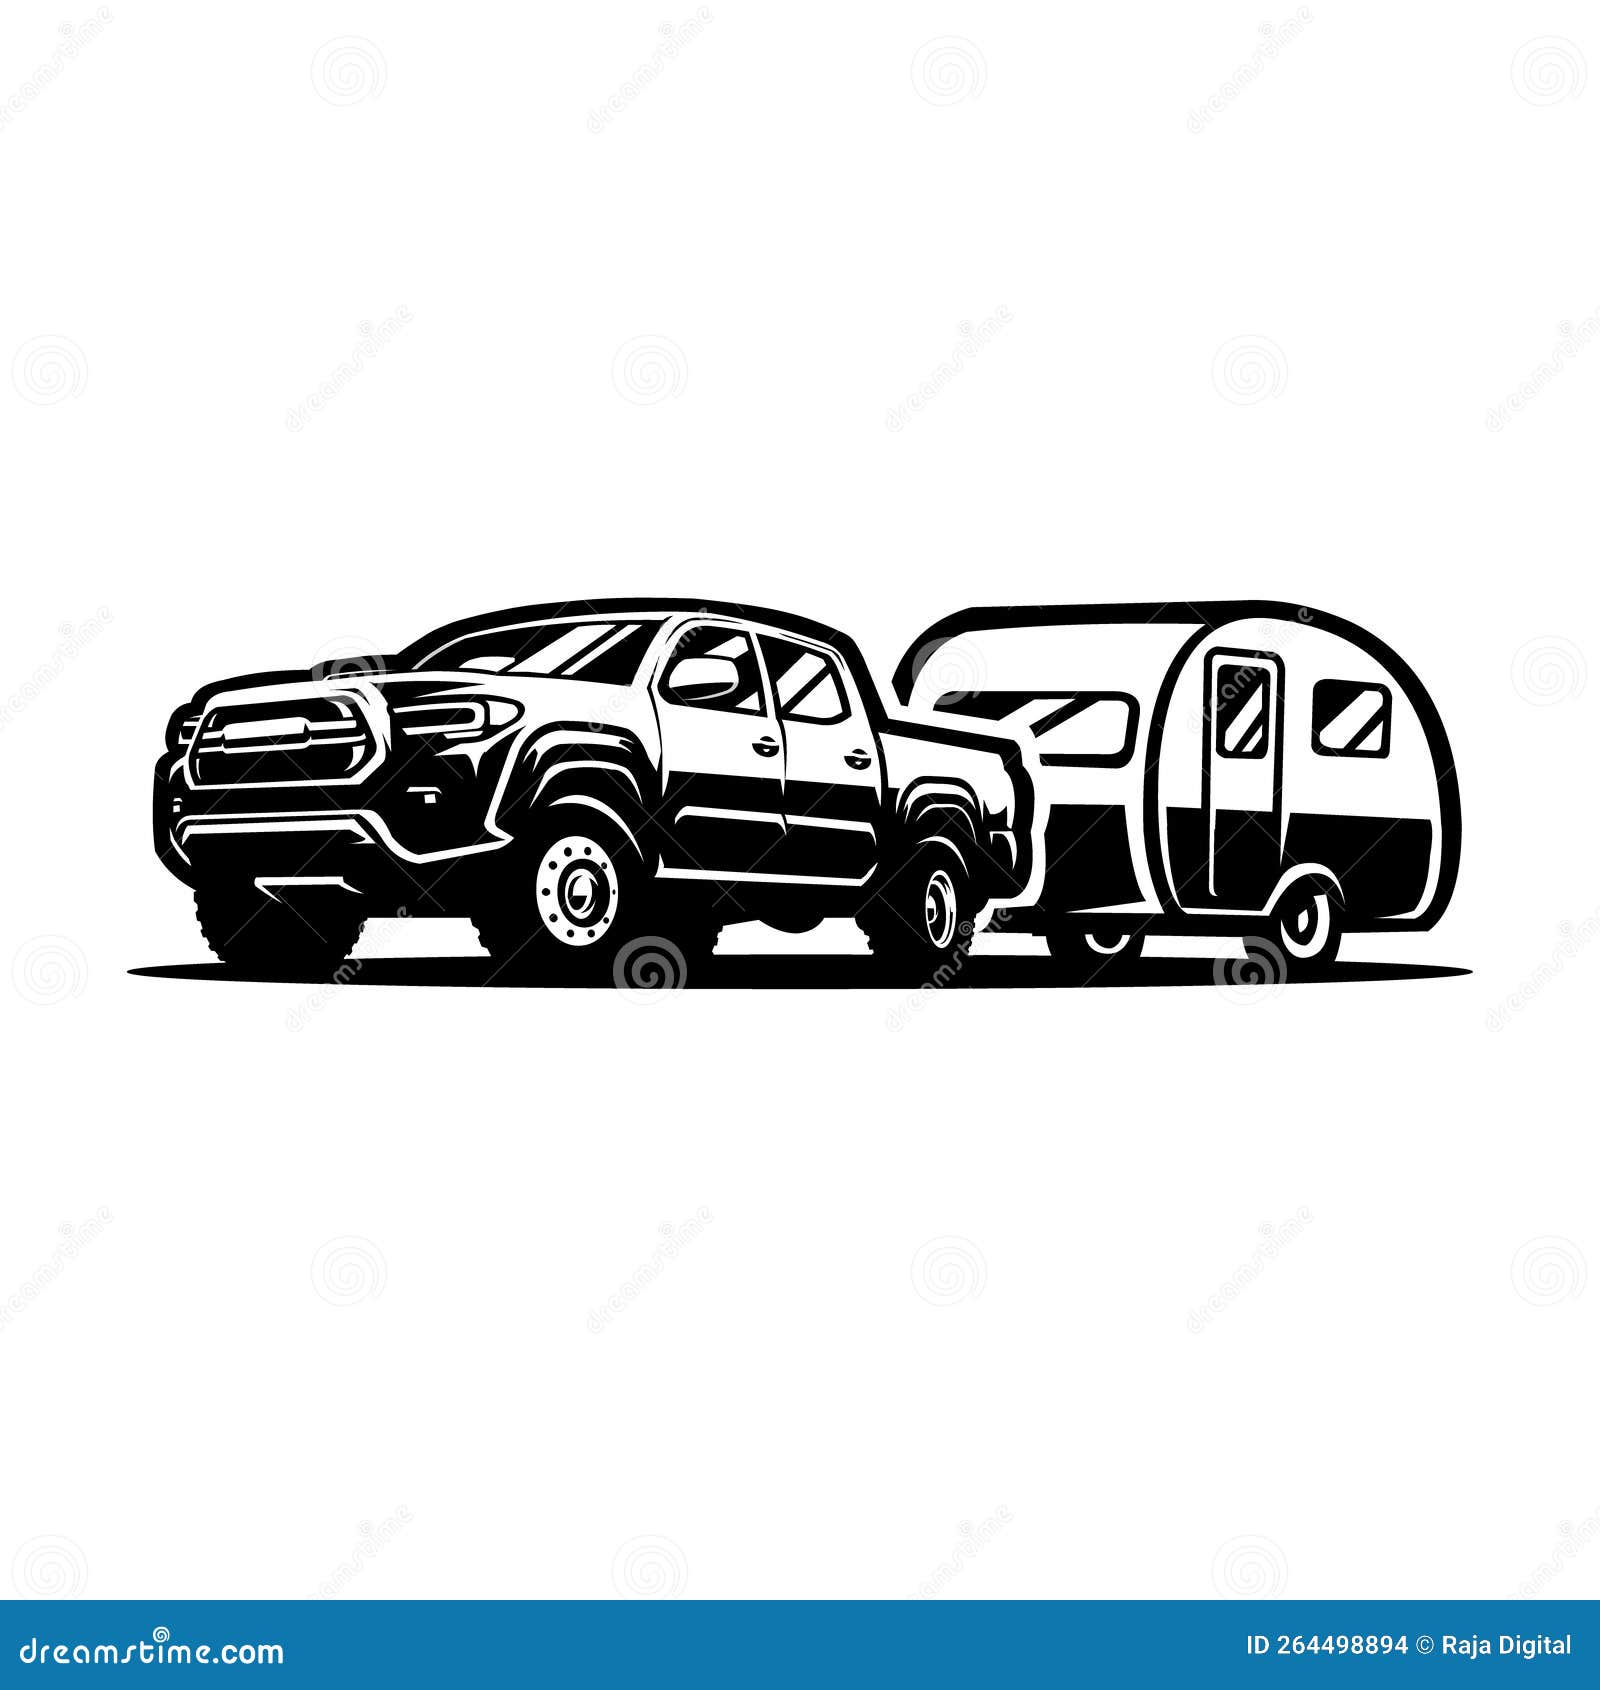 Premium Motorhome RV Camper Van Circle Emblem Logo Vector Isolated ...